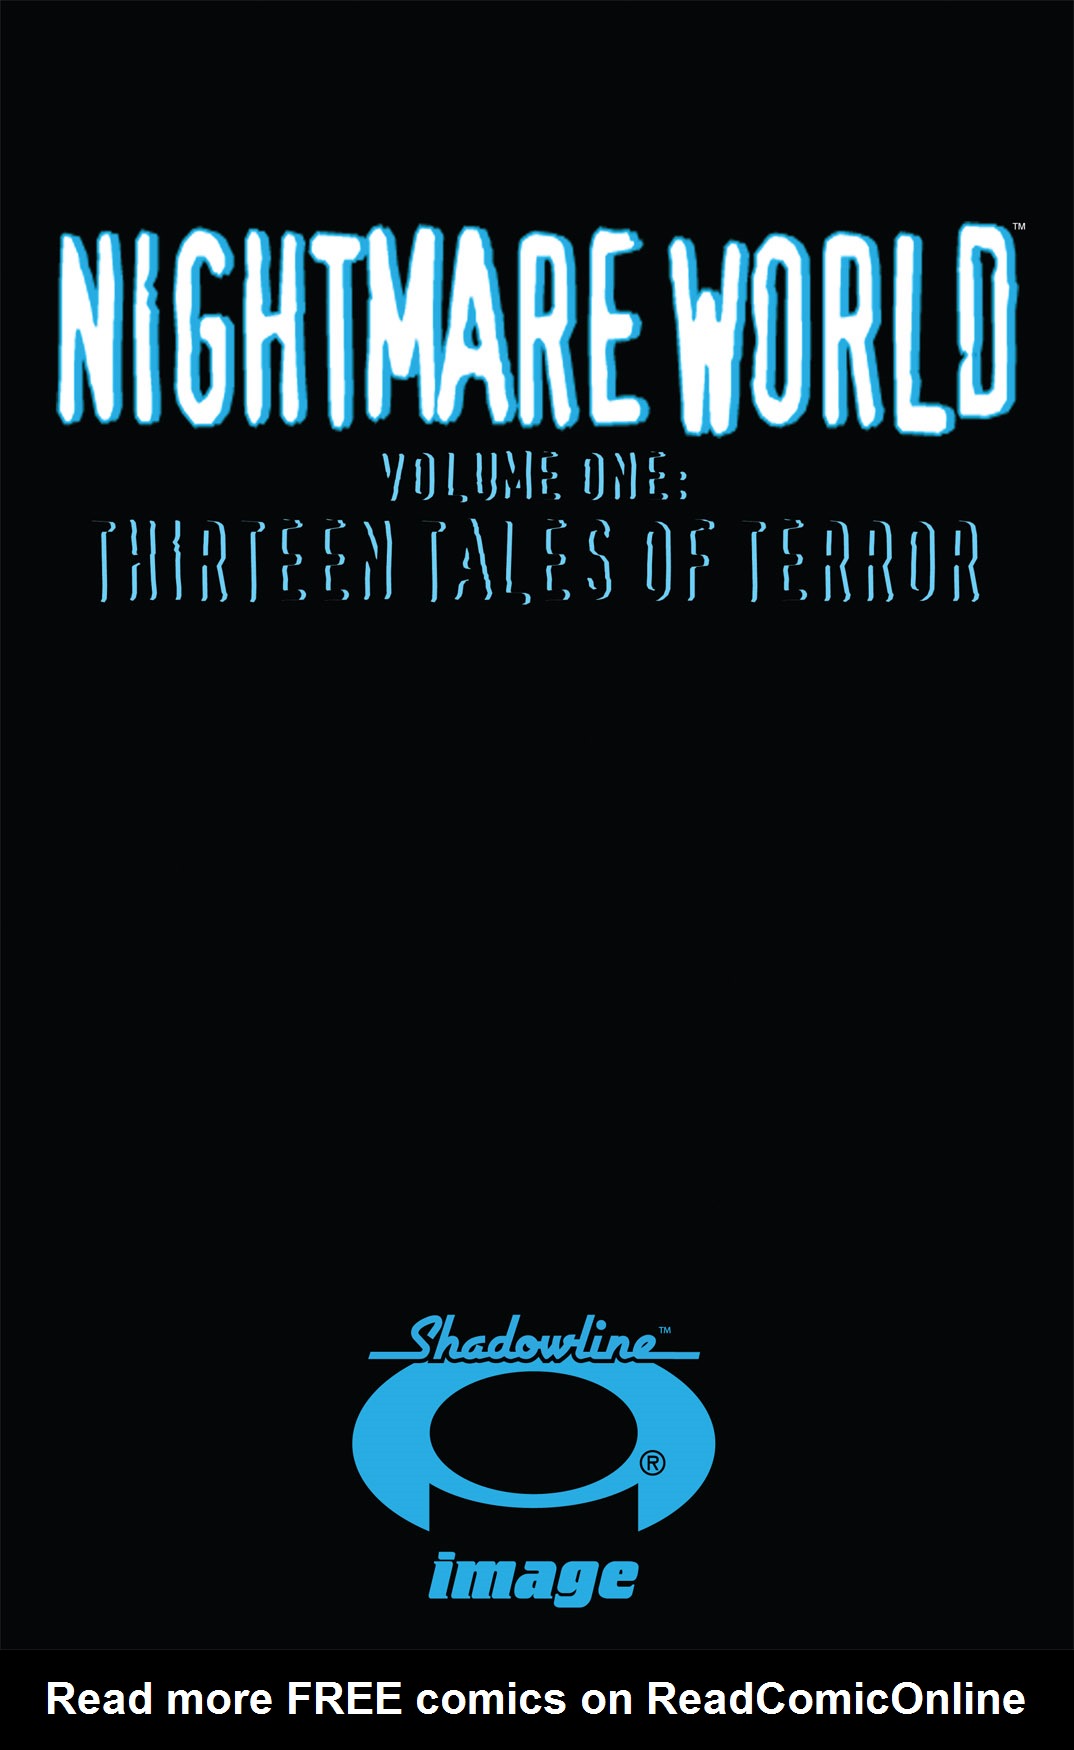 Read online Nightmare World comic -  Issue # Vol. 1 Thirteen Tales of Terror - 2